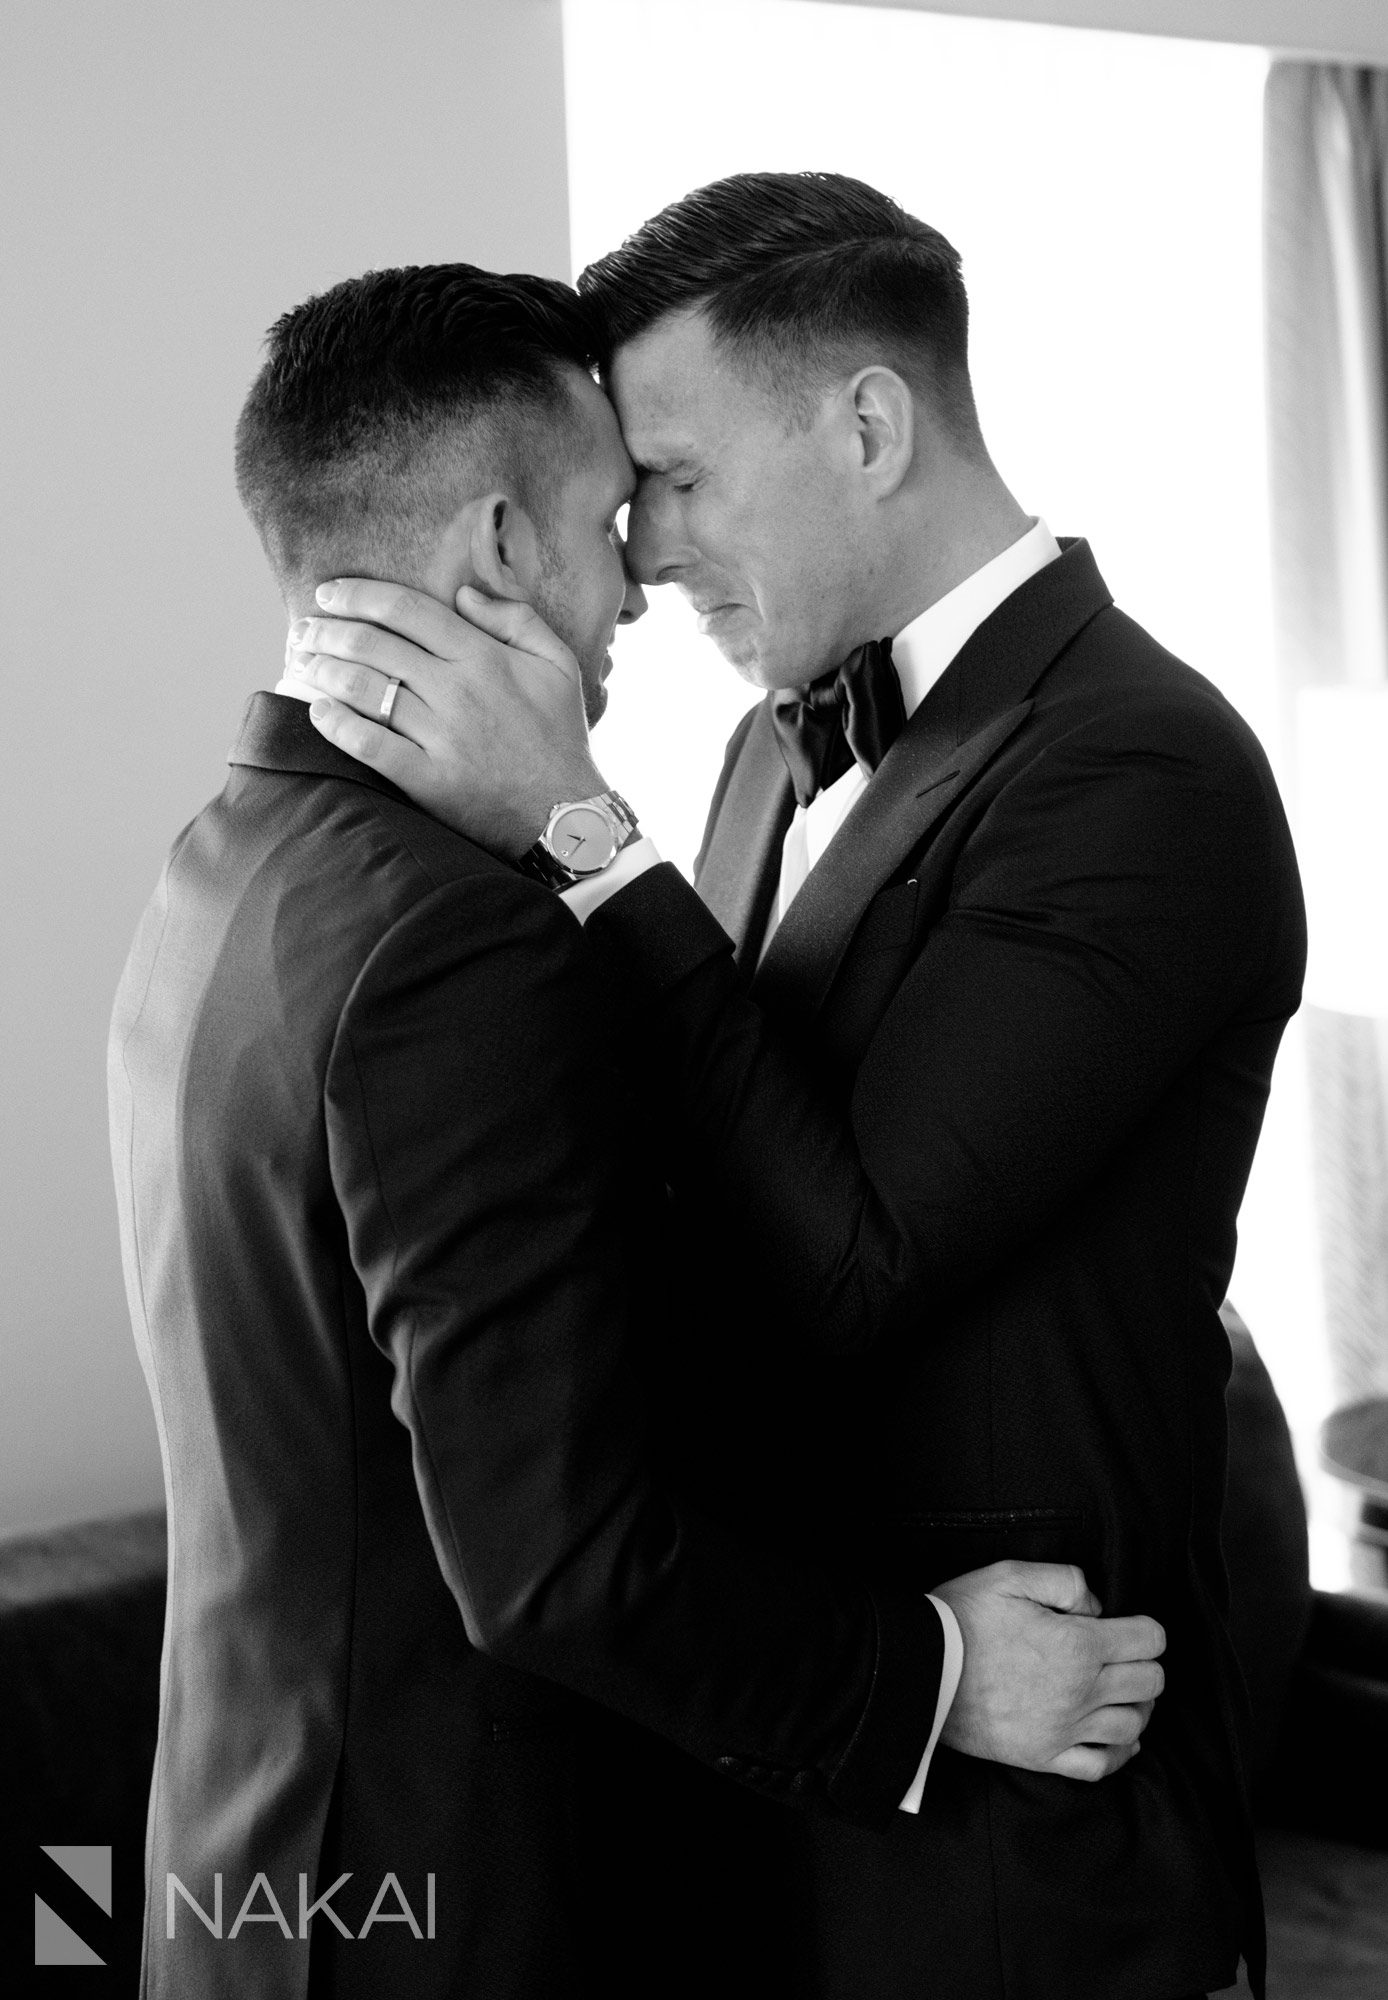 Chicago gay wedding photographer